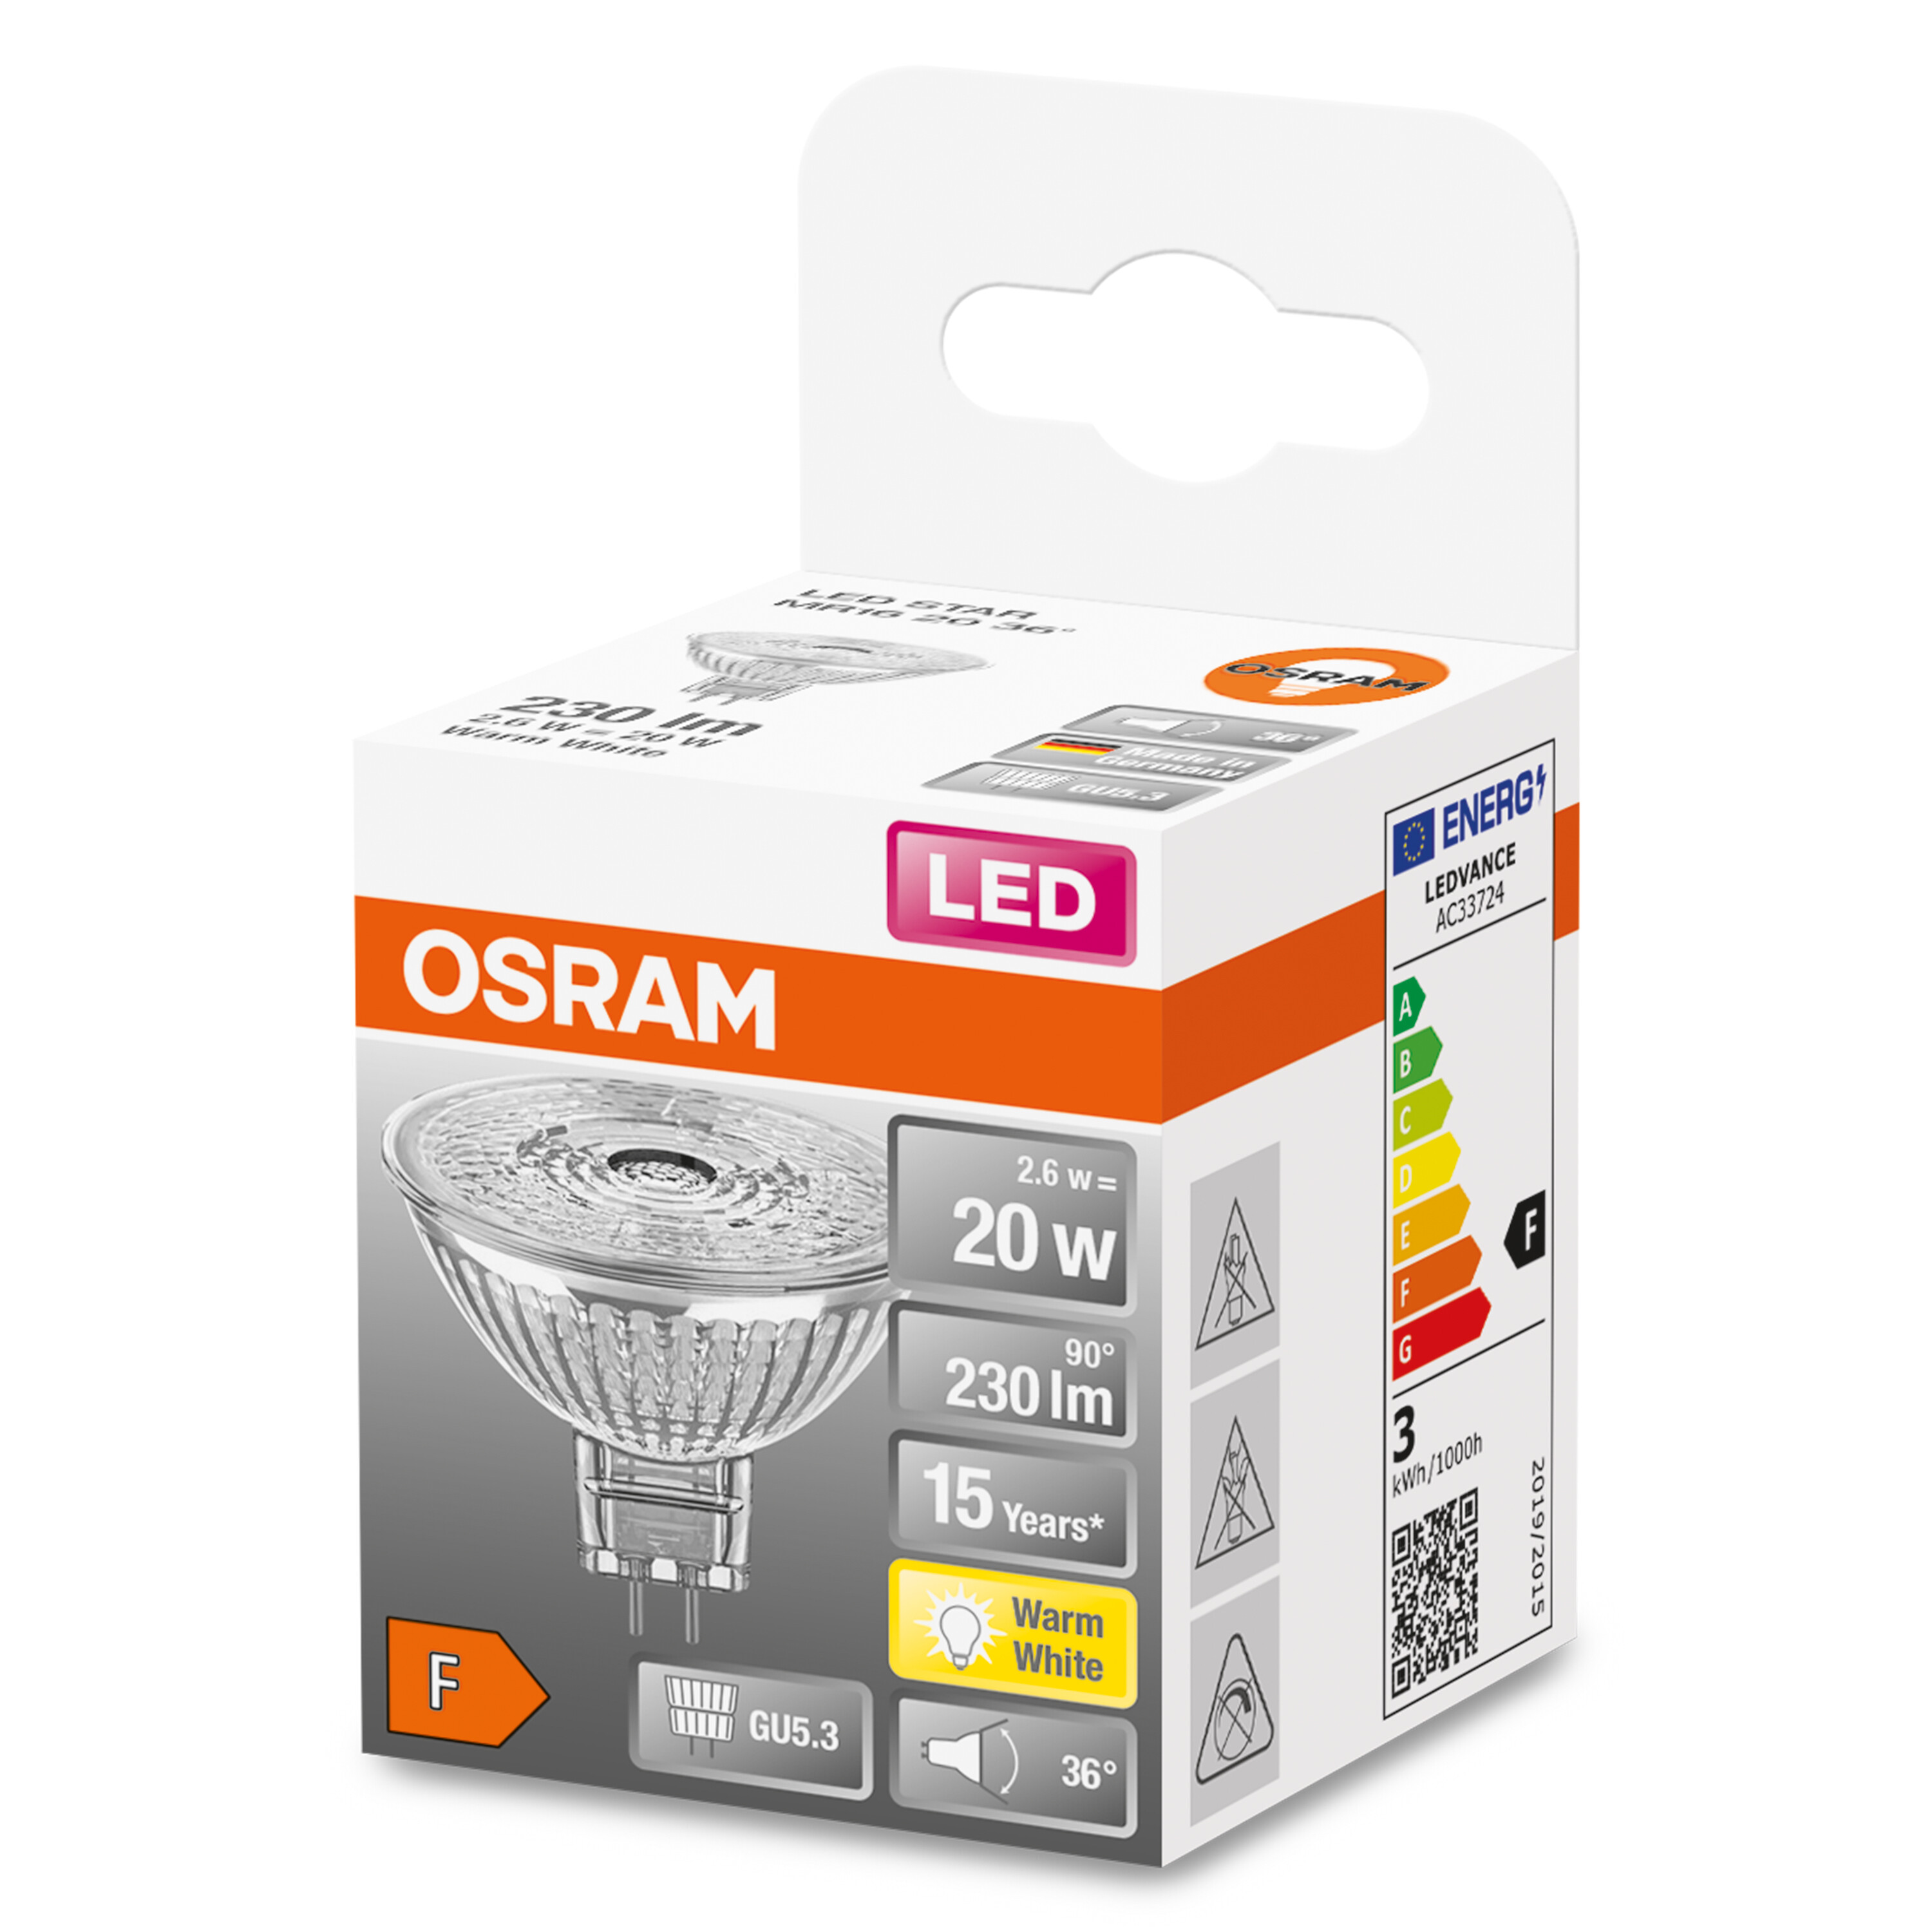 LED MR16 LED-Refektorlampe Warmweiß OSRAM  STAR